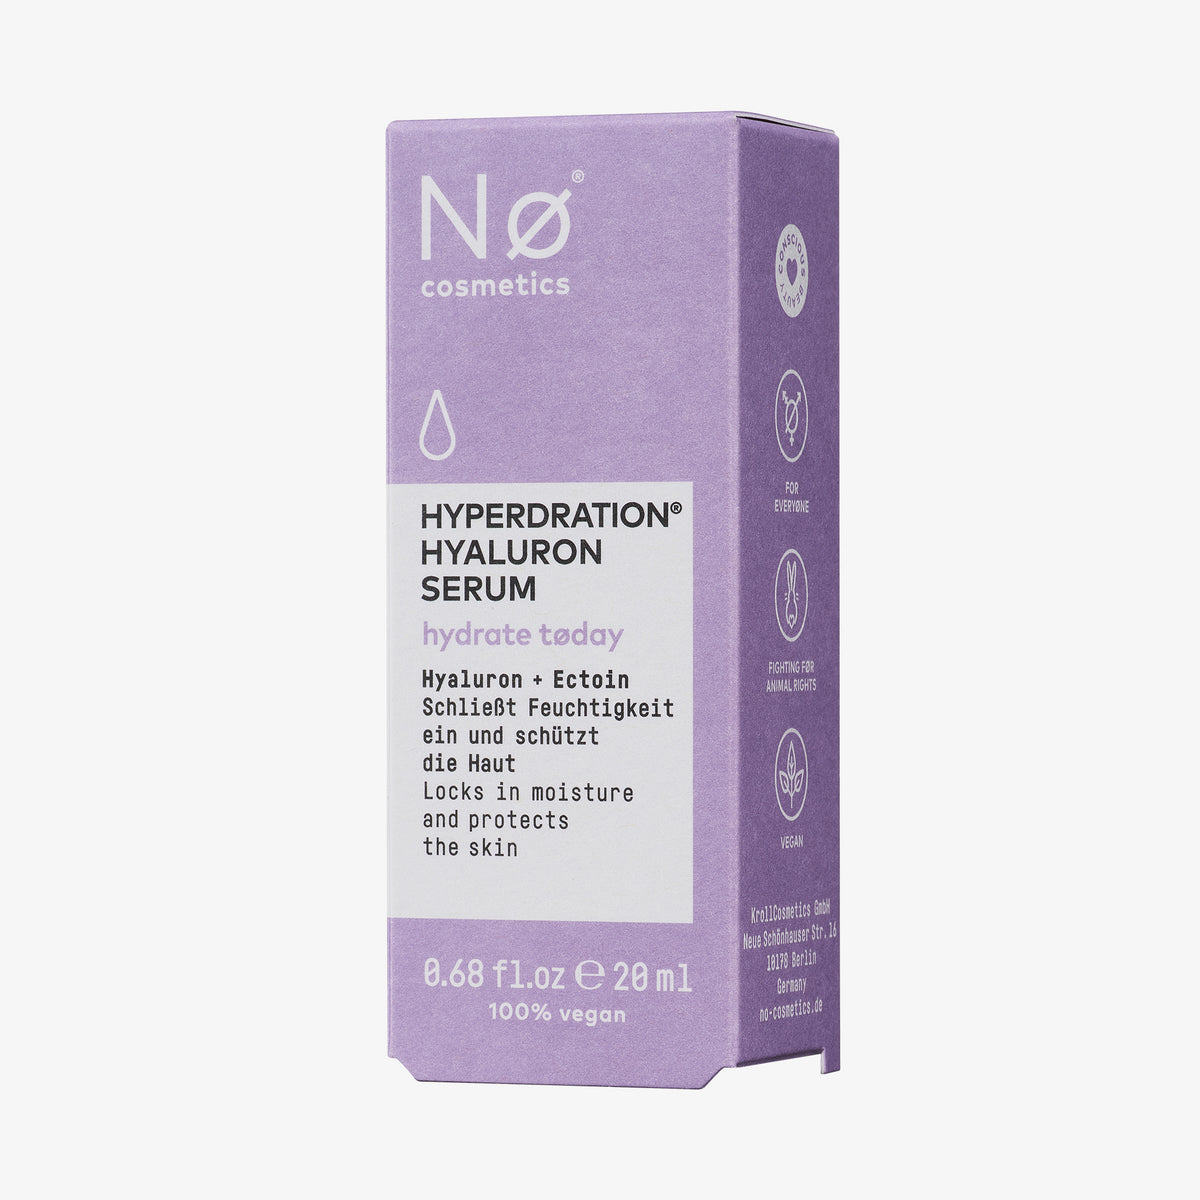 hydrate tøday Hyperdration®️ 4D Hyaluron Serum